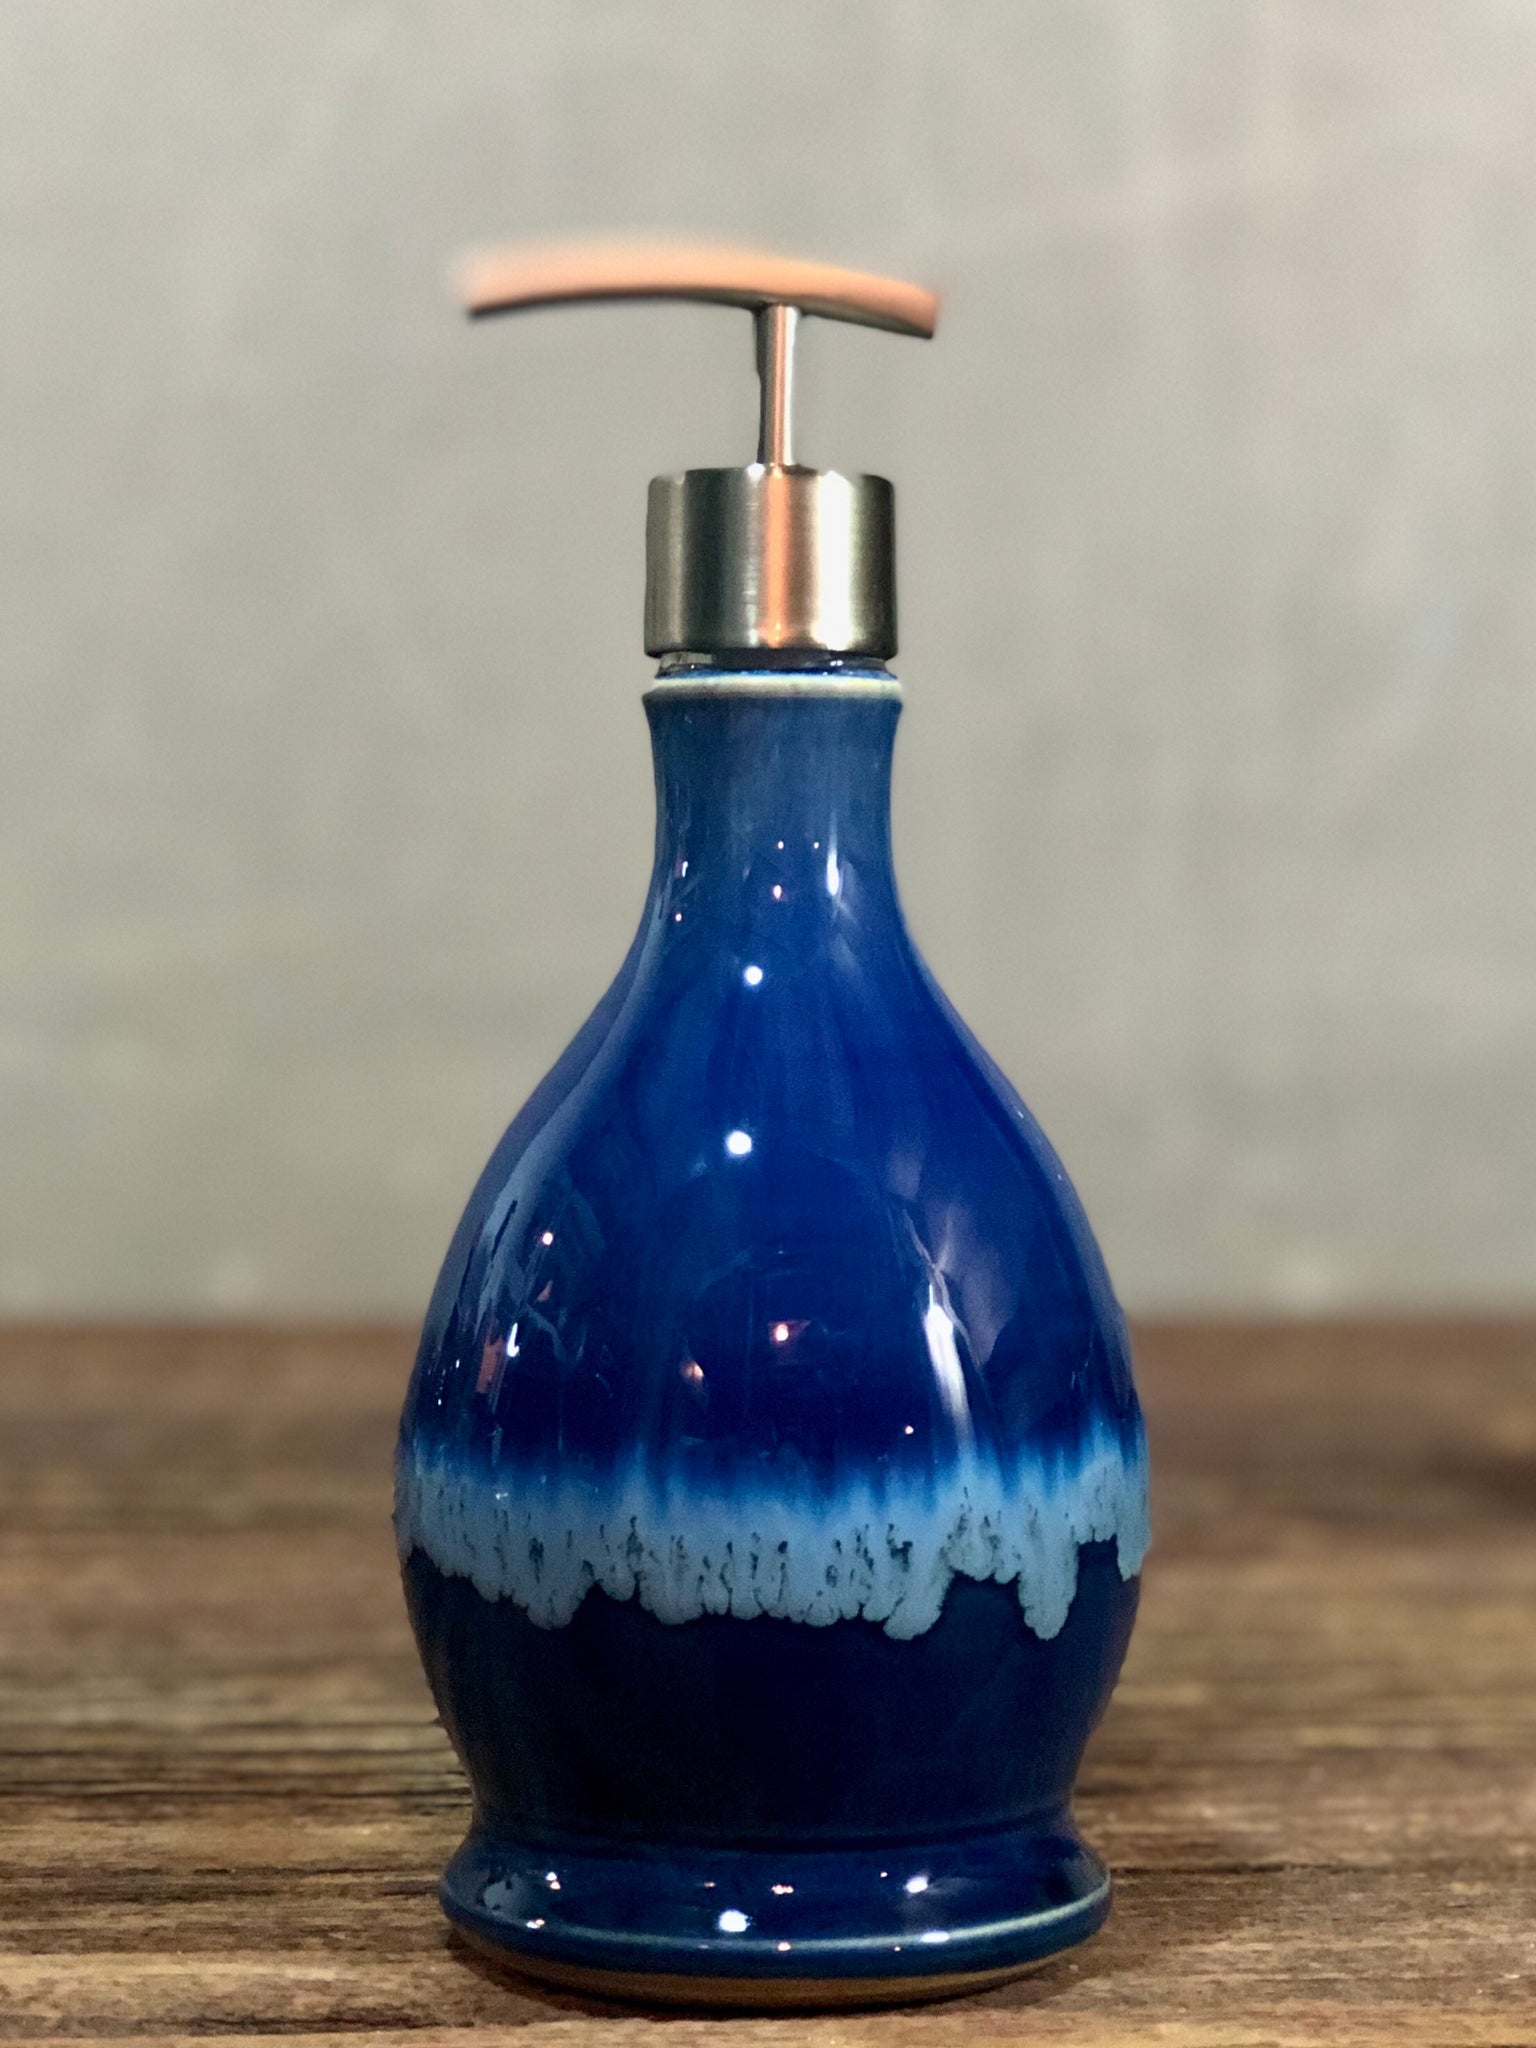 Blue Peacock Soap/Lotion Pump - Ceramic Liquid Dispenser for Bathroom Décor